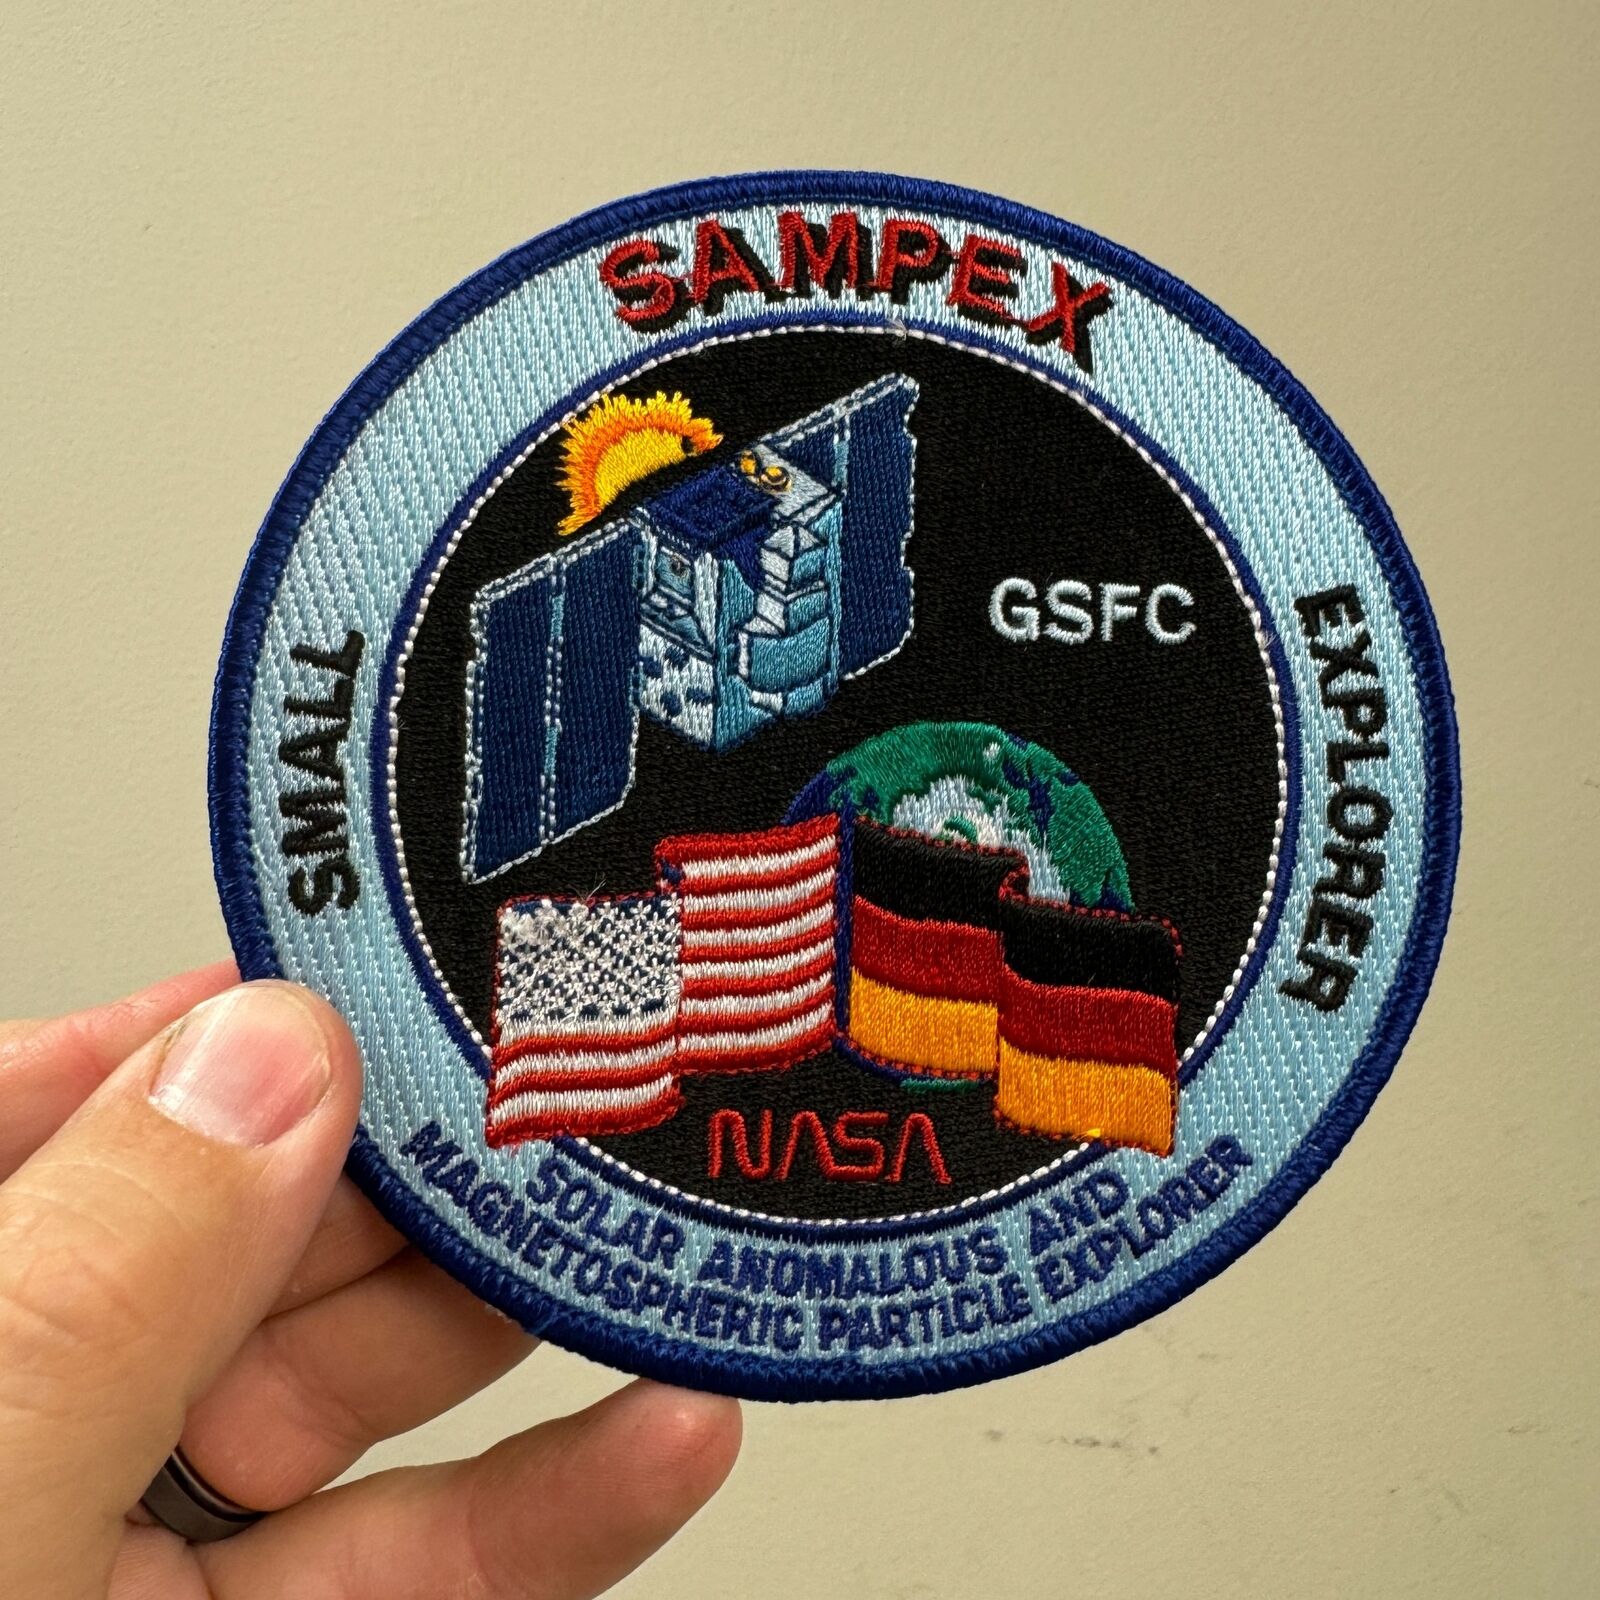 VTG NASA Small Explorer SAMPEX GSFC Goddard Space Flight Center Patch Sattellite